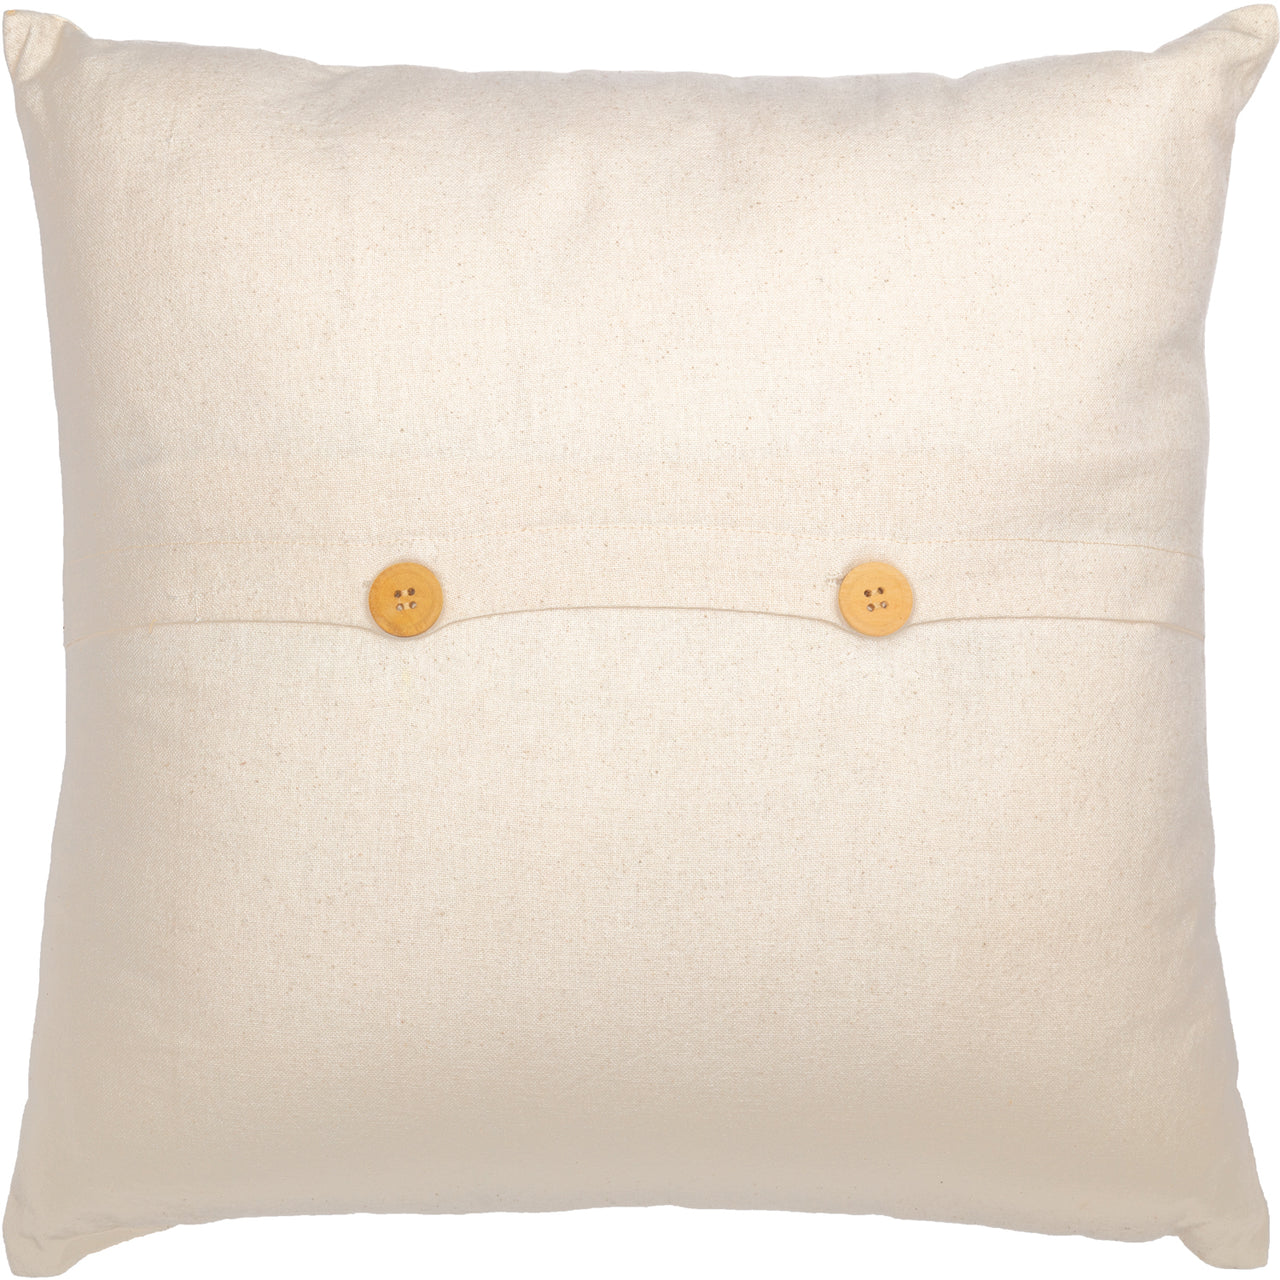 Casement Natural Grateful Thankful Blessed Pillow 18x18 VHC Brands